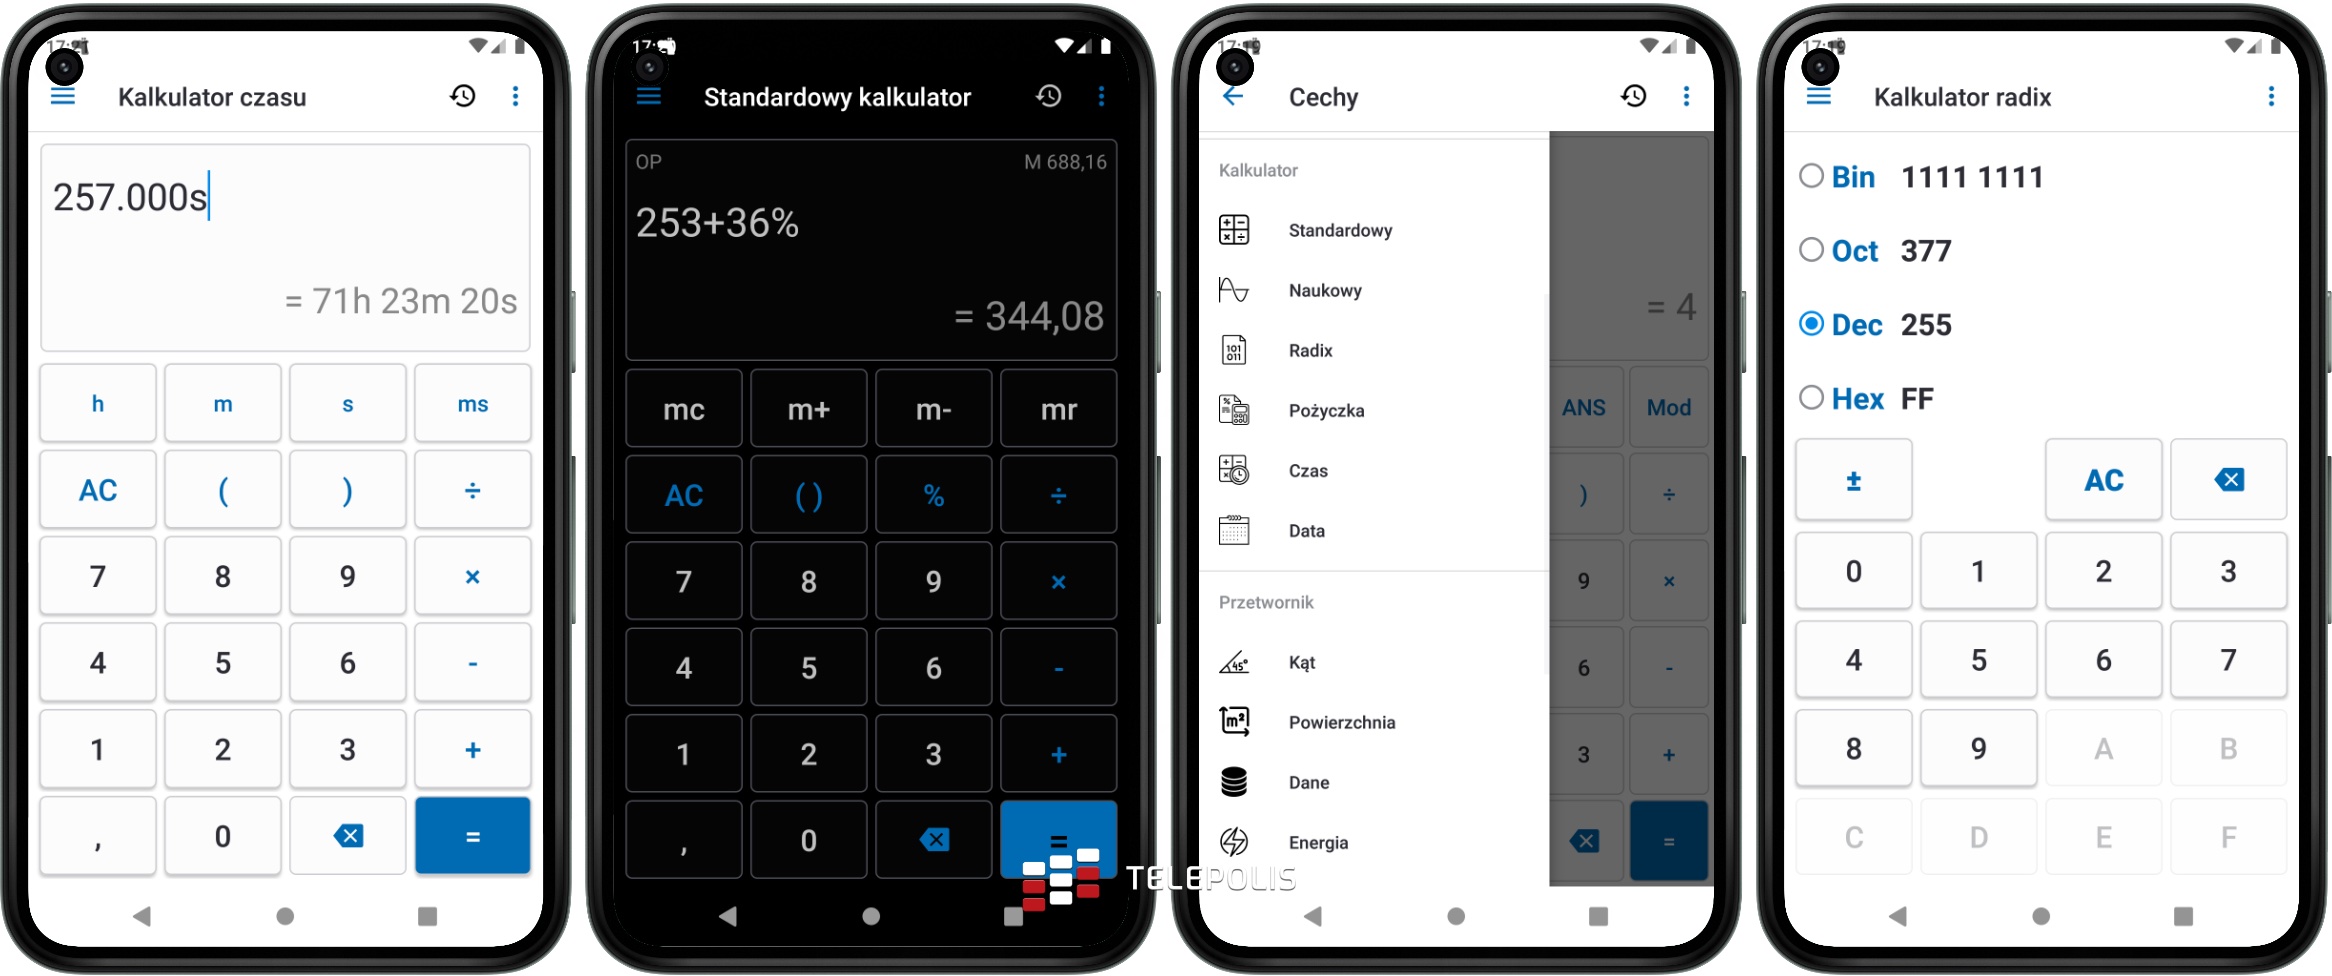 NT Calculator dla Androida za darmo w Google Play